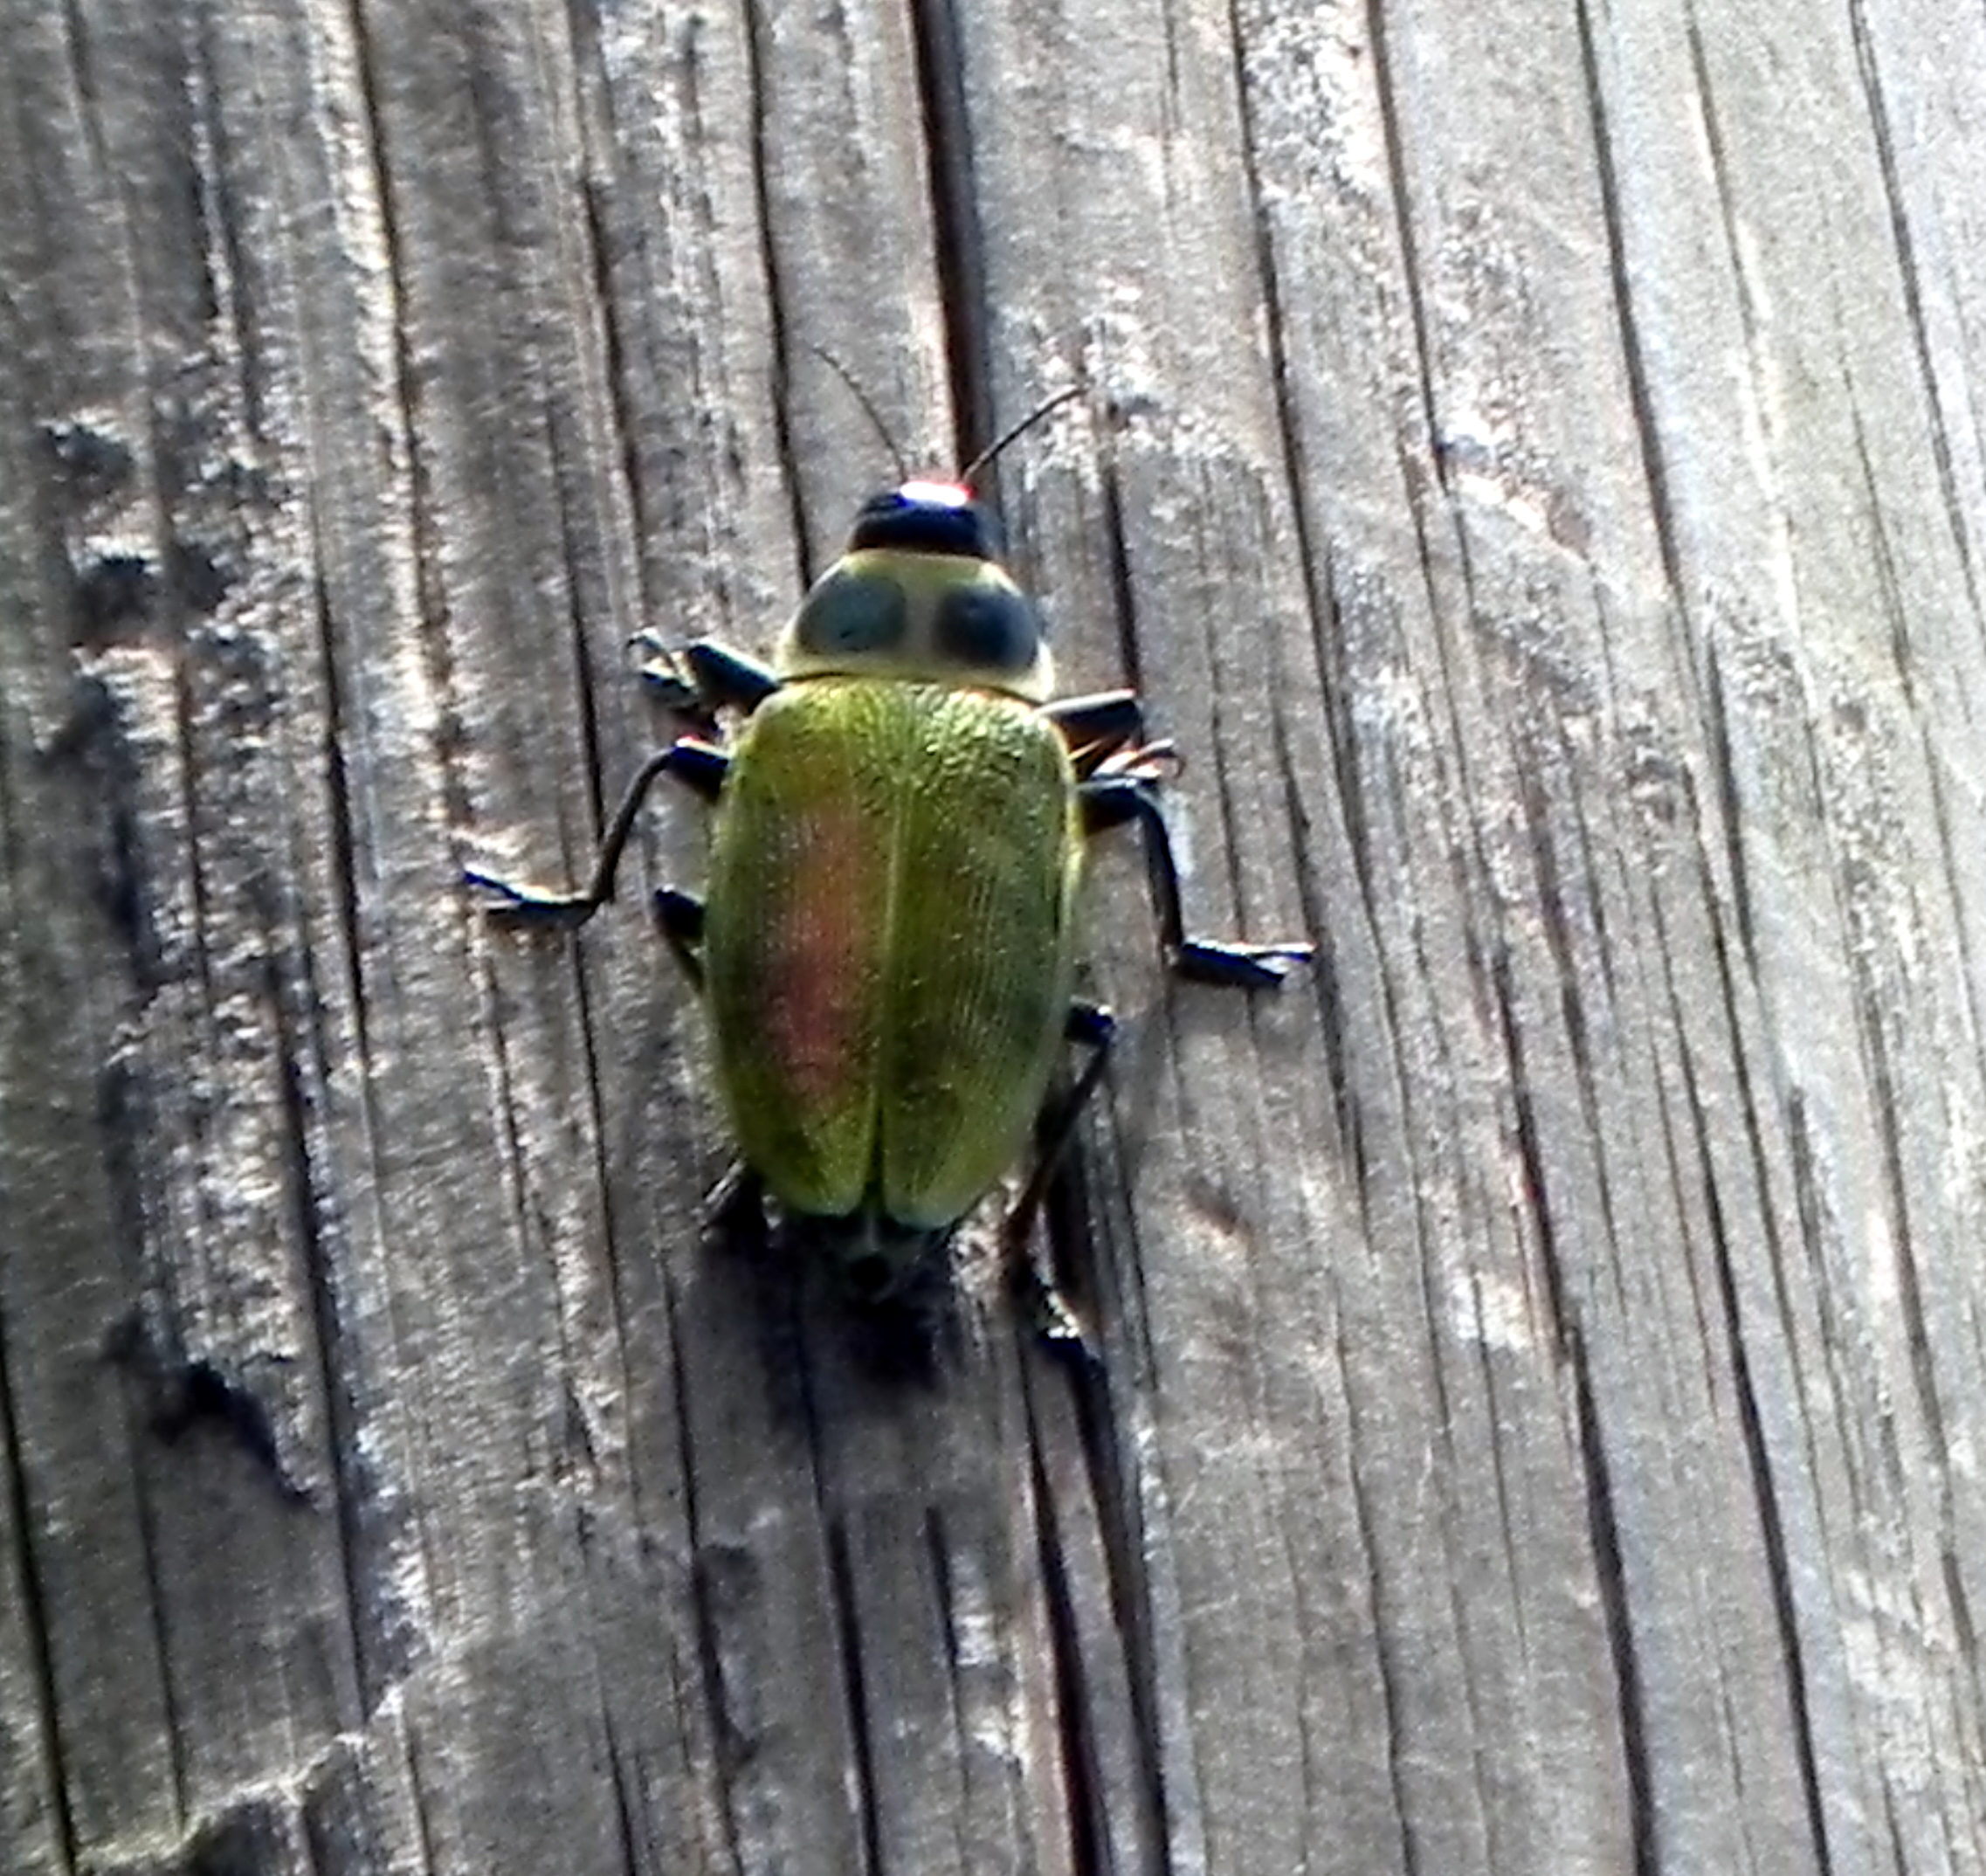 438a Euchroma gigantea (giant metallic ceiba borer), a beetle in the ...